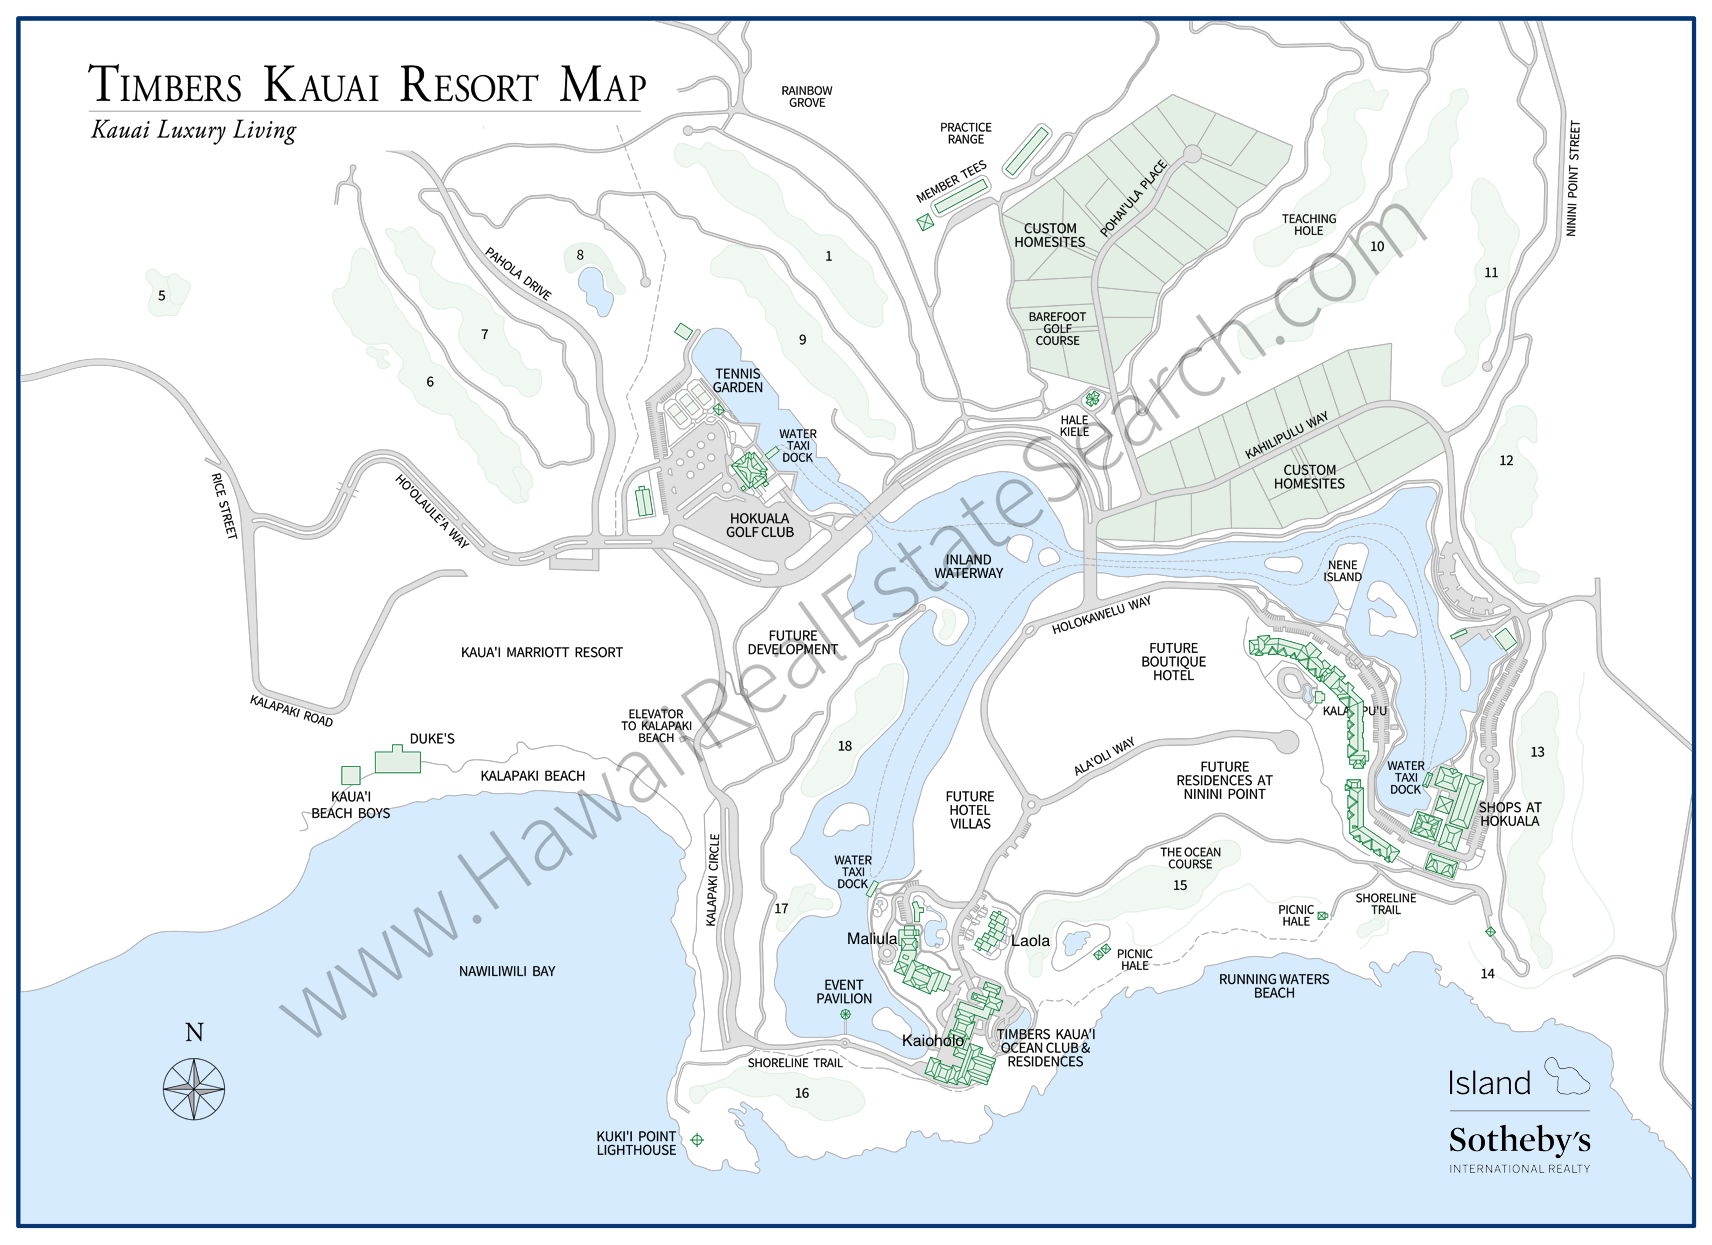 TK Resort Map 2018